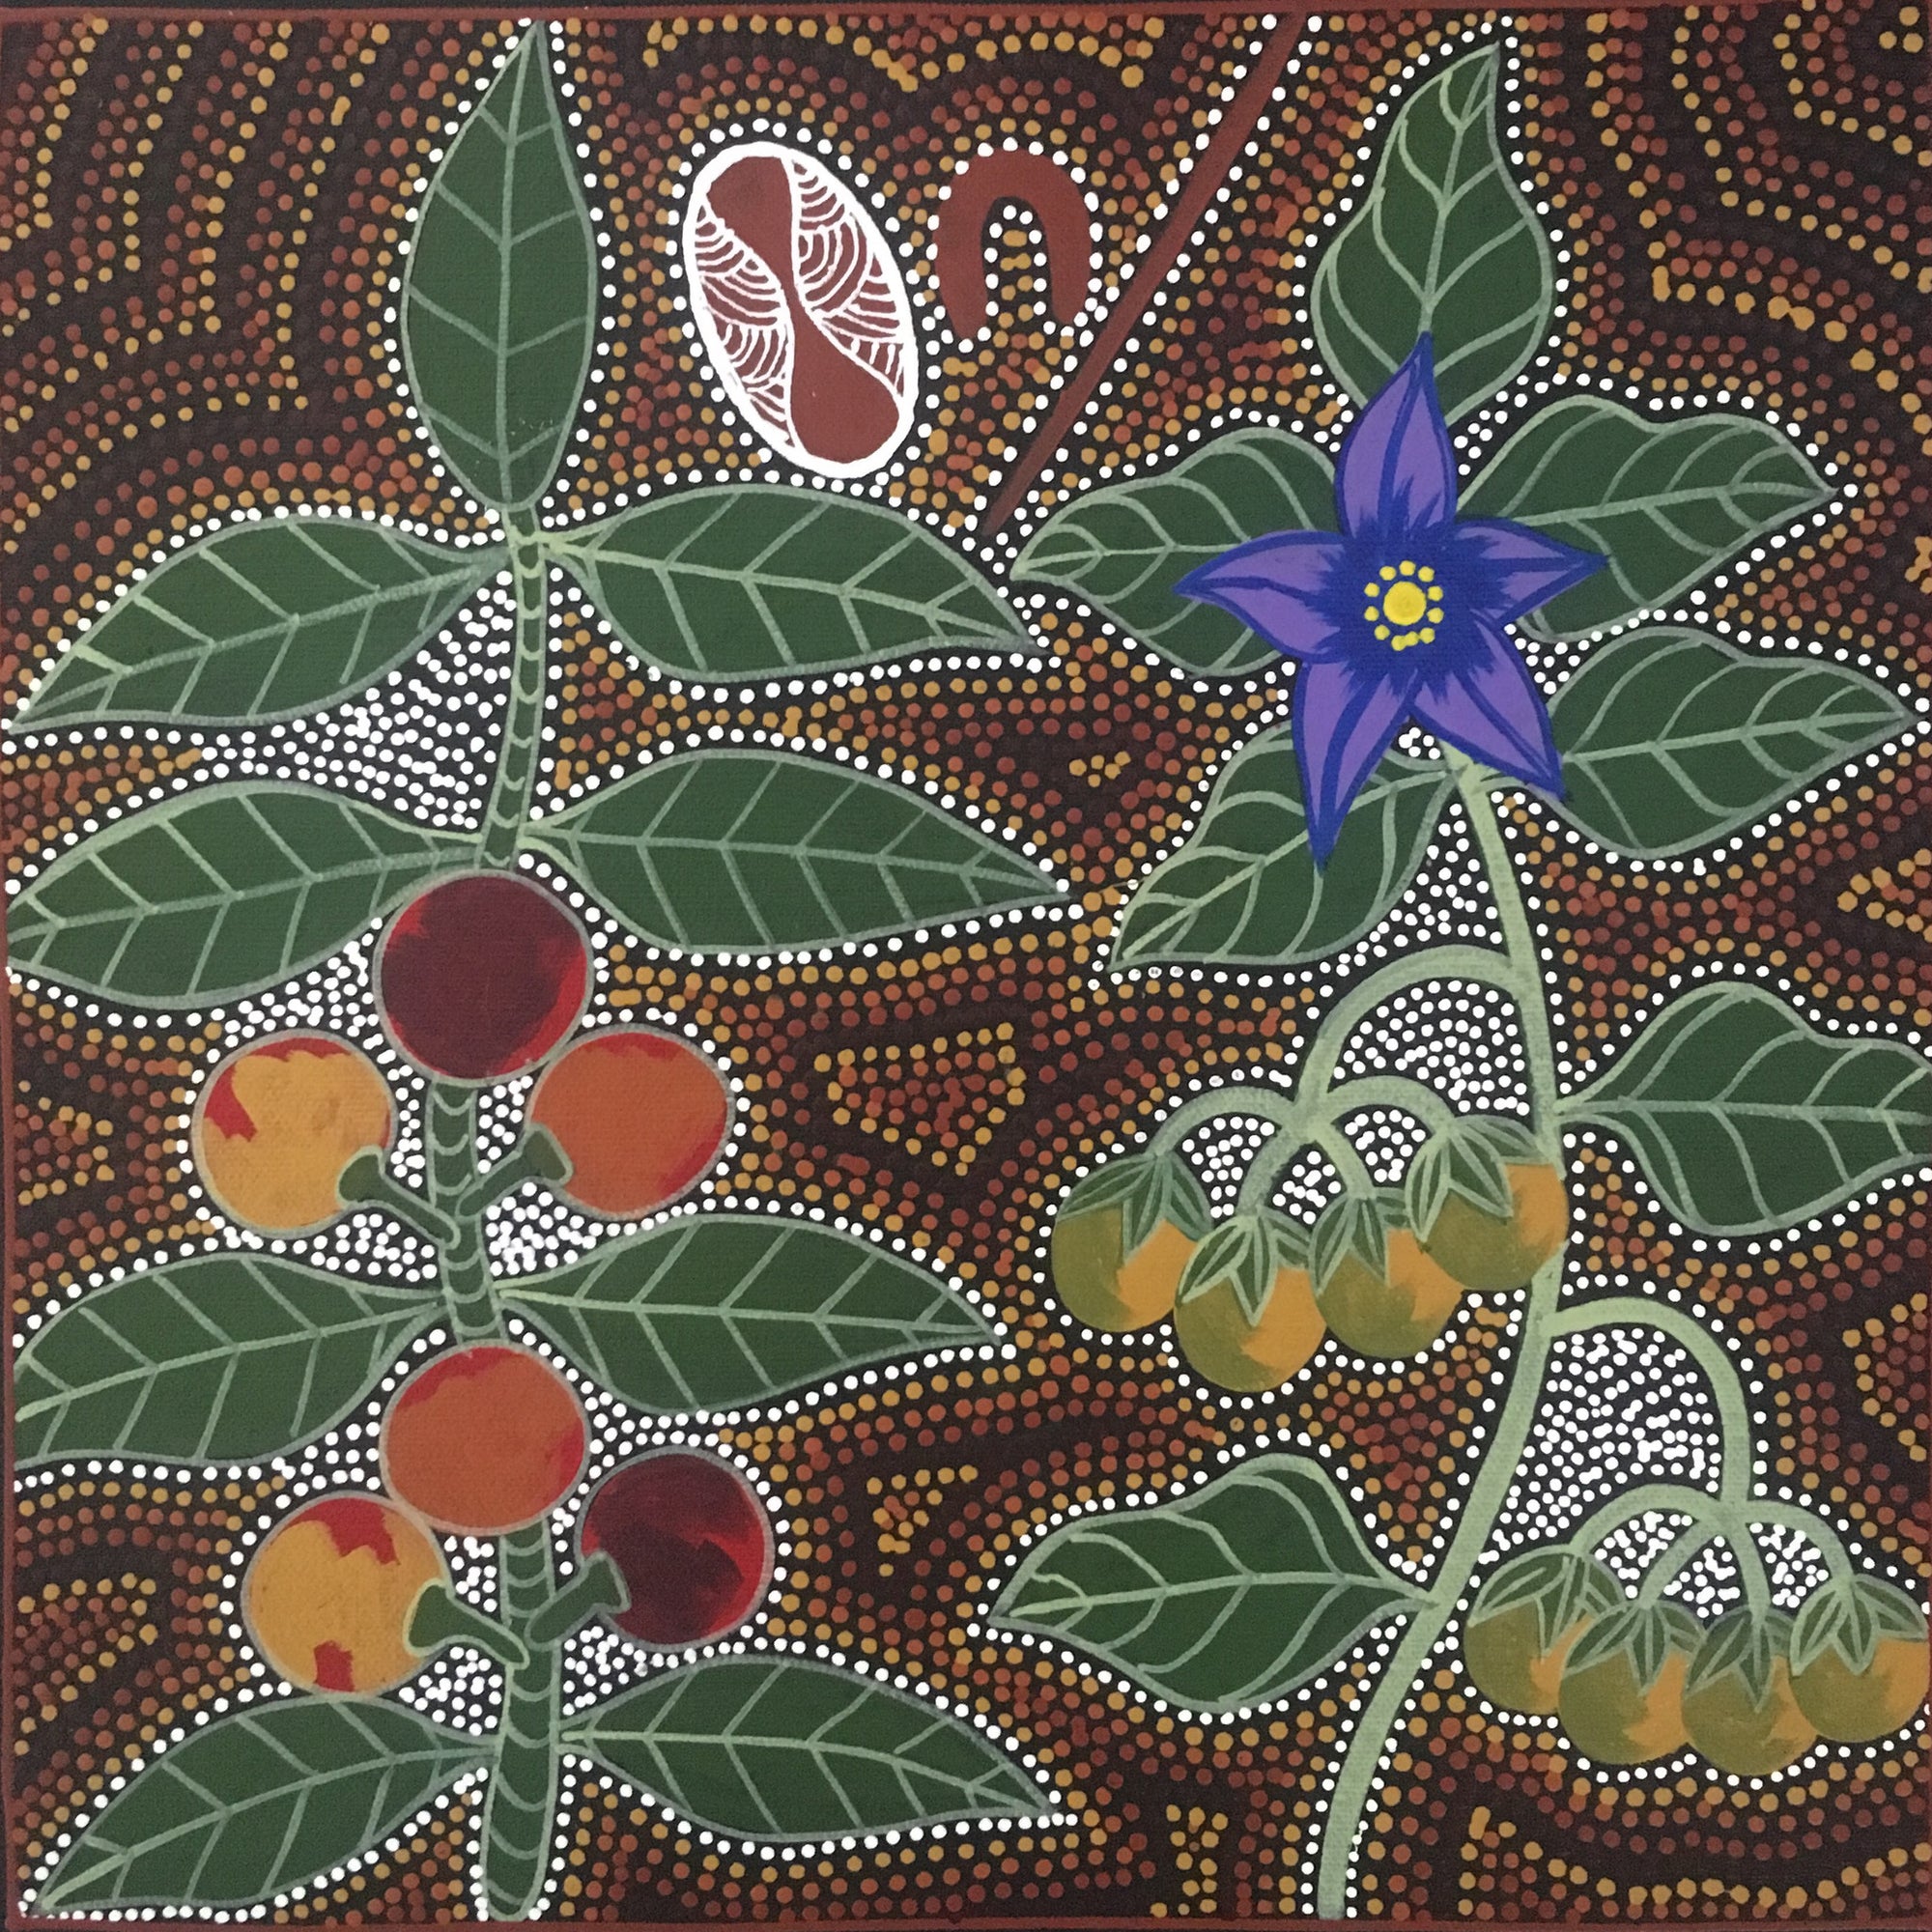 Bush Tucker by Marie Ryder, 30cm x 30cm. Aboriginal Painting. #AboriginalArt #UtopiaLane